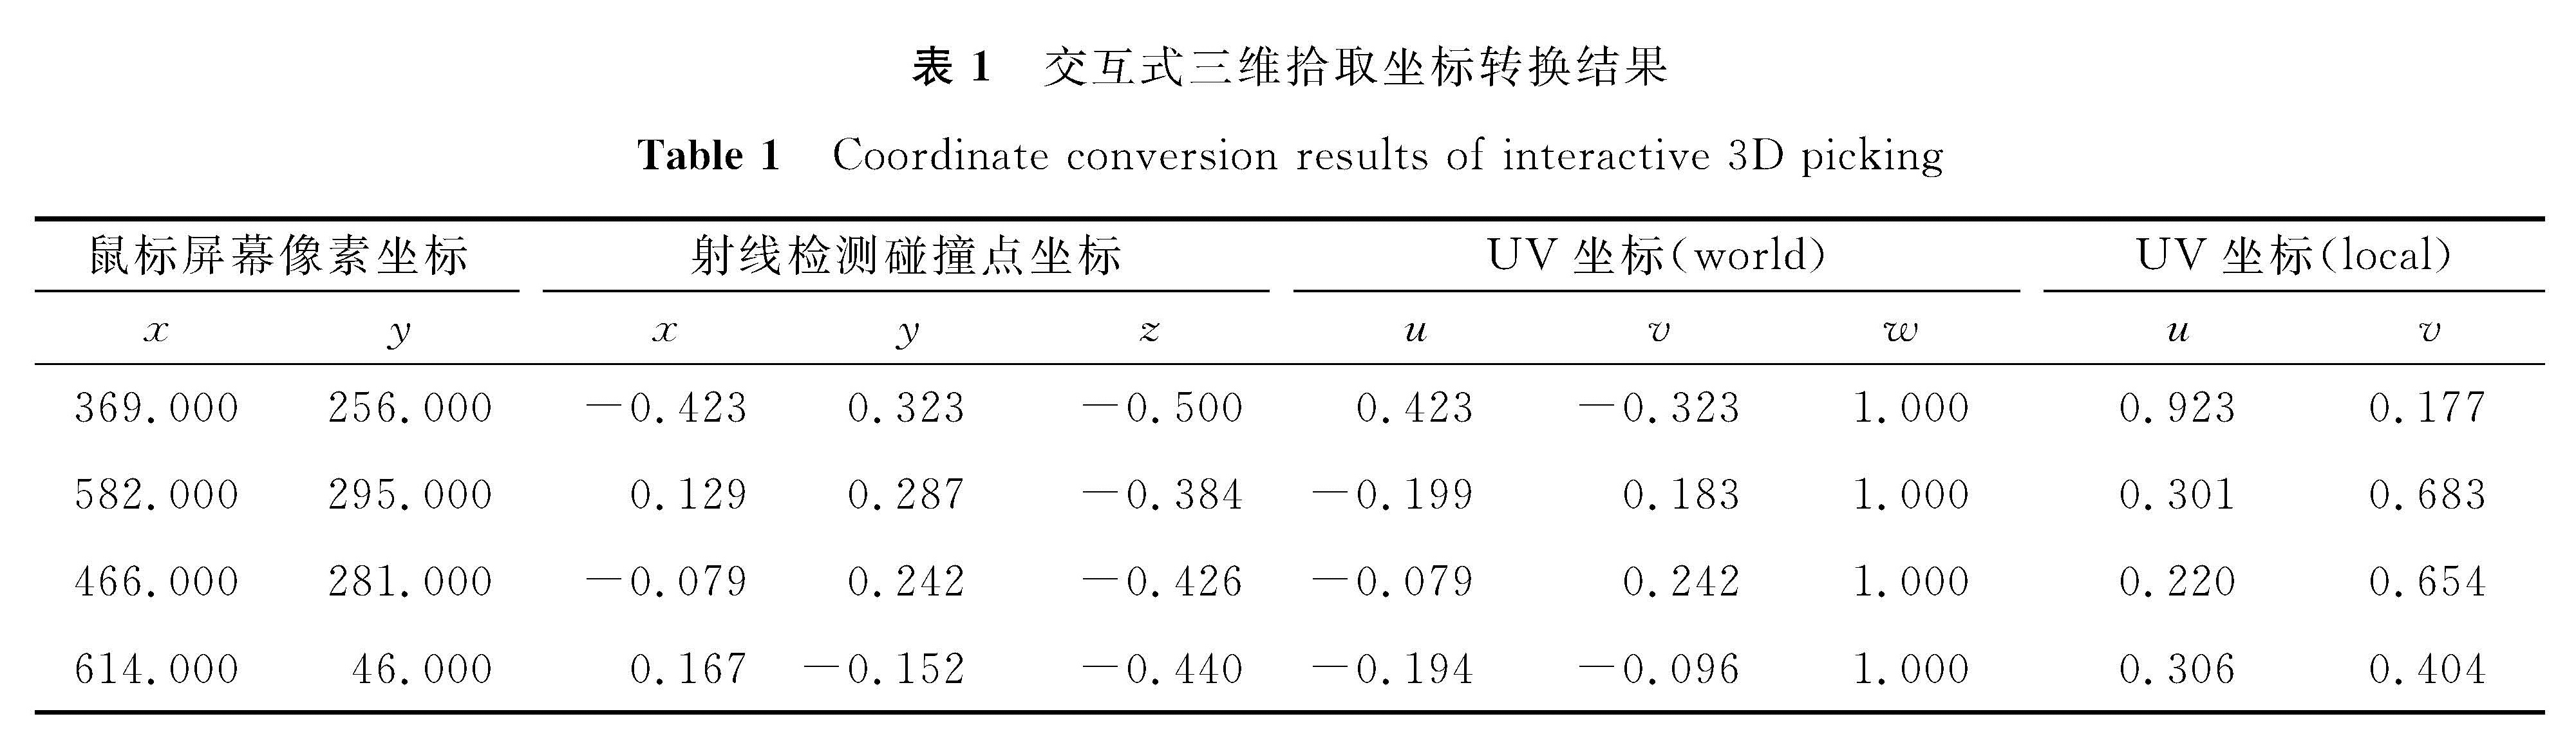 表1 交互式三维拾取坐标转换结果<br/>Table 1 Coordinate conversion results of interactive 3D picking